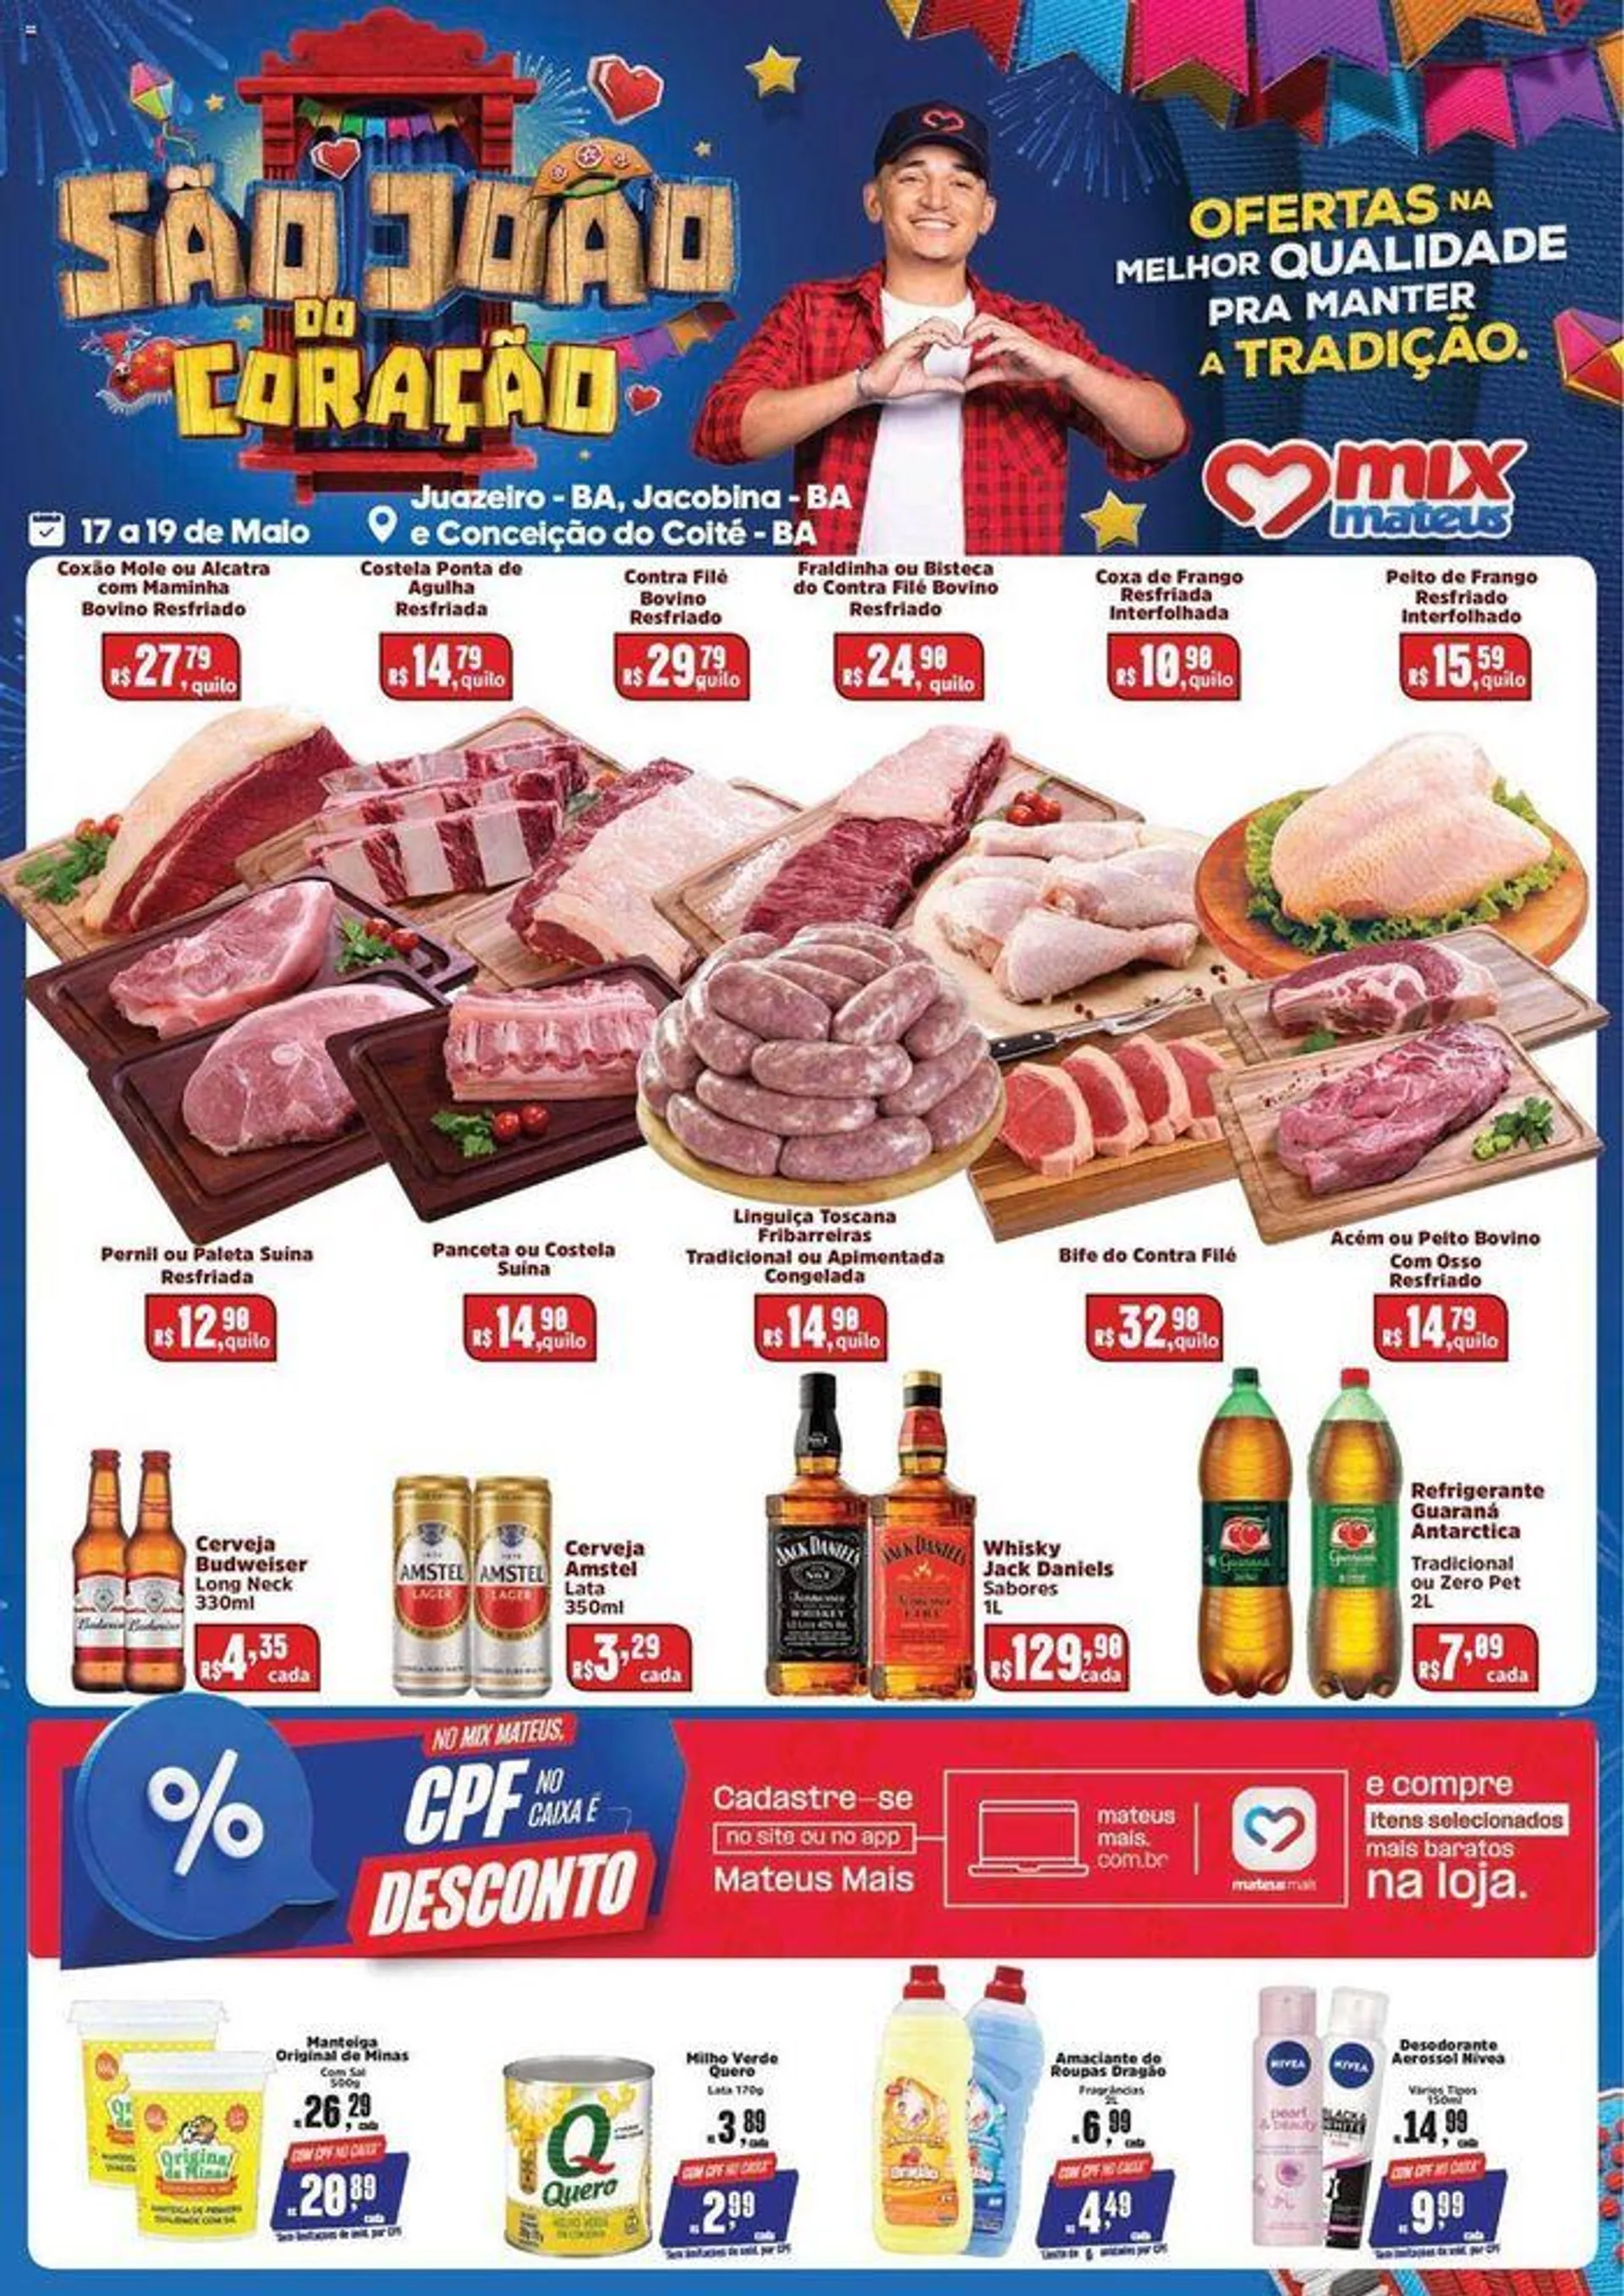 Ofertas Supermercados Mateus - 1